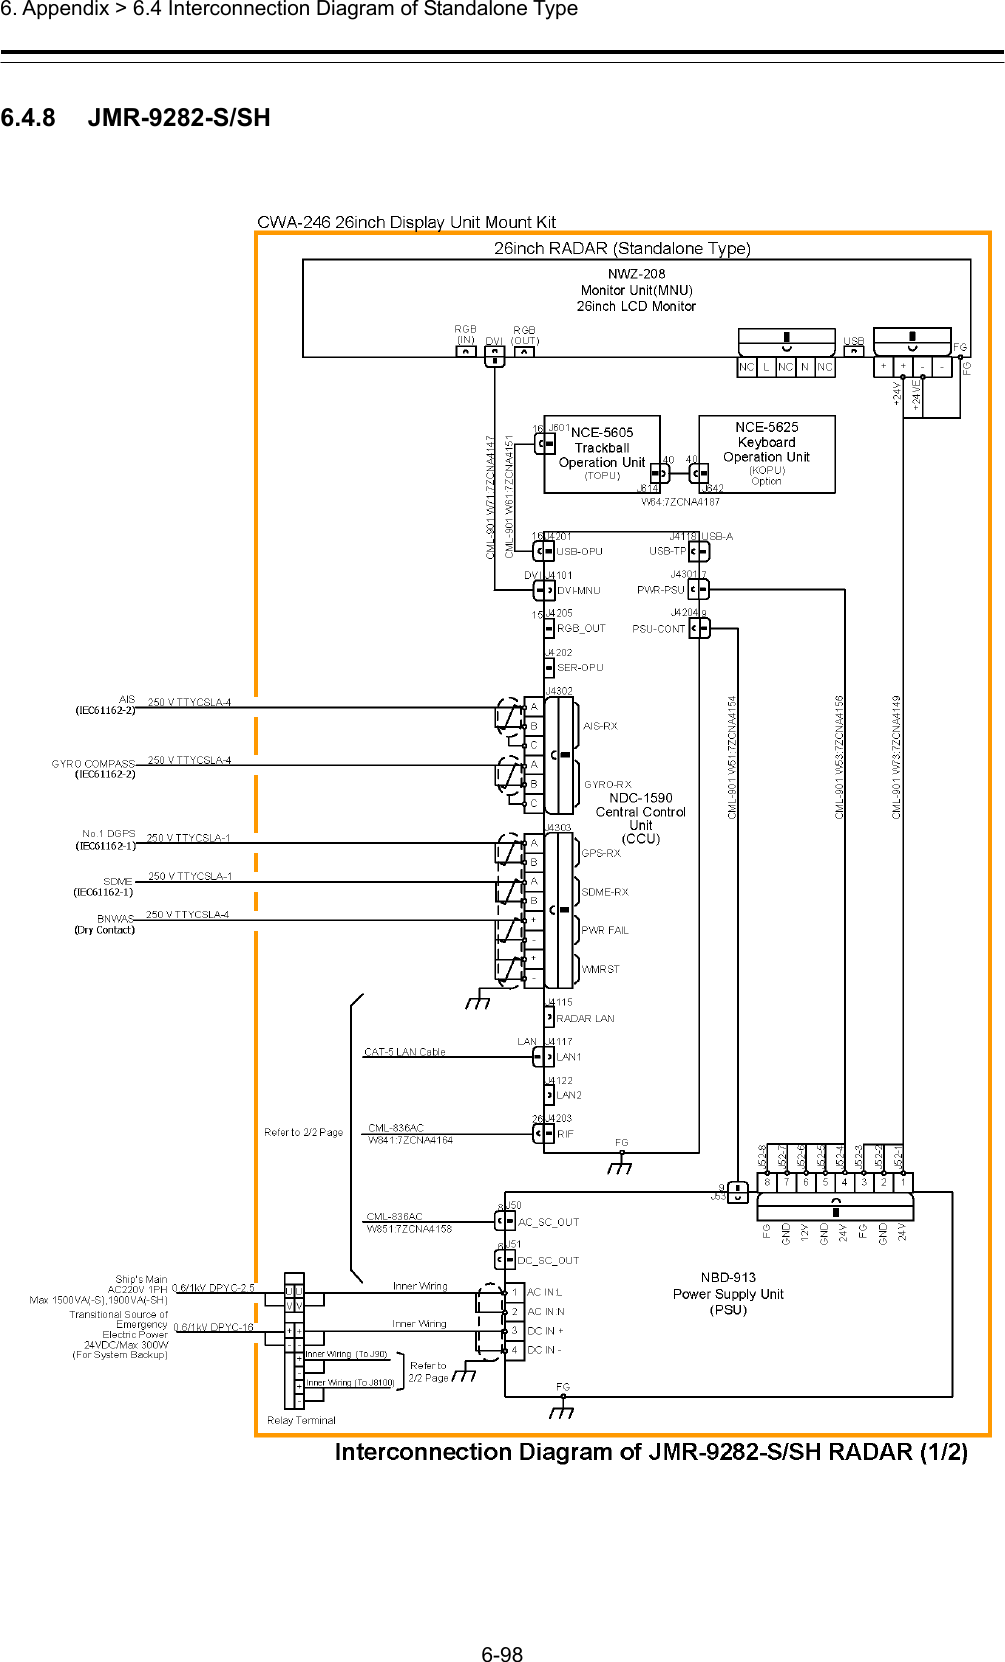  6. Appendix &gt; 6.4 Interconnection Diagram of Standalone Type 6-98  6.4.8   JMR-9282-S/SH 